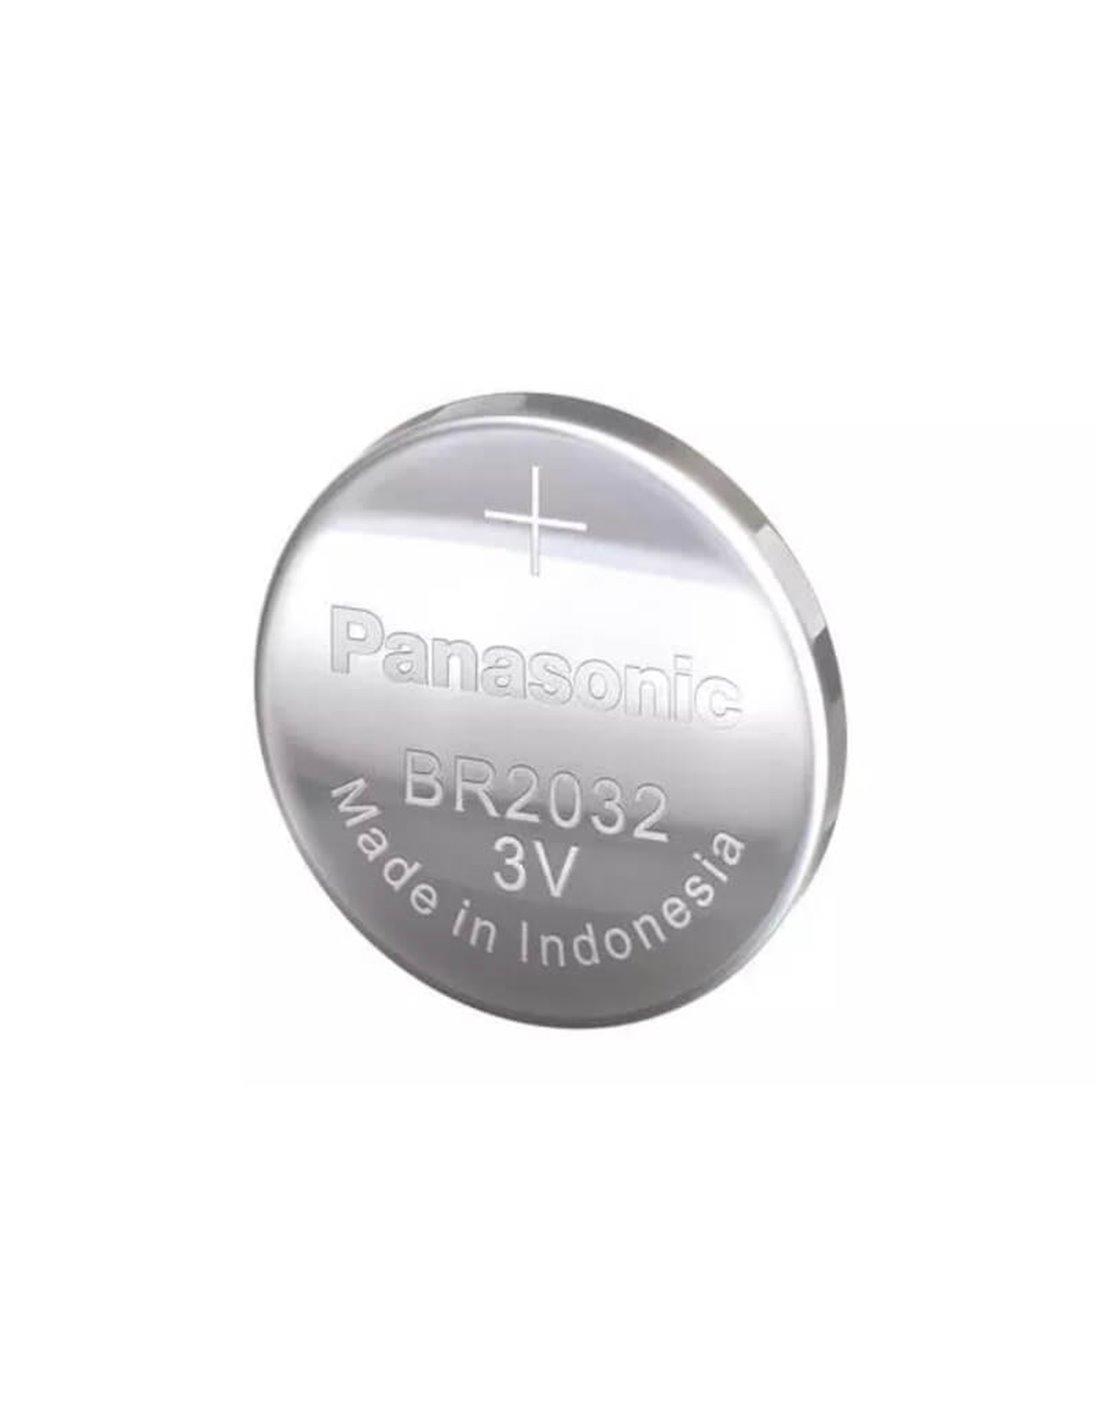 Panasonic BR2032, BR-2032 3 Volt 190mAh Lithium Battery